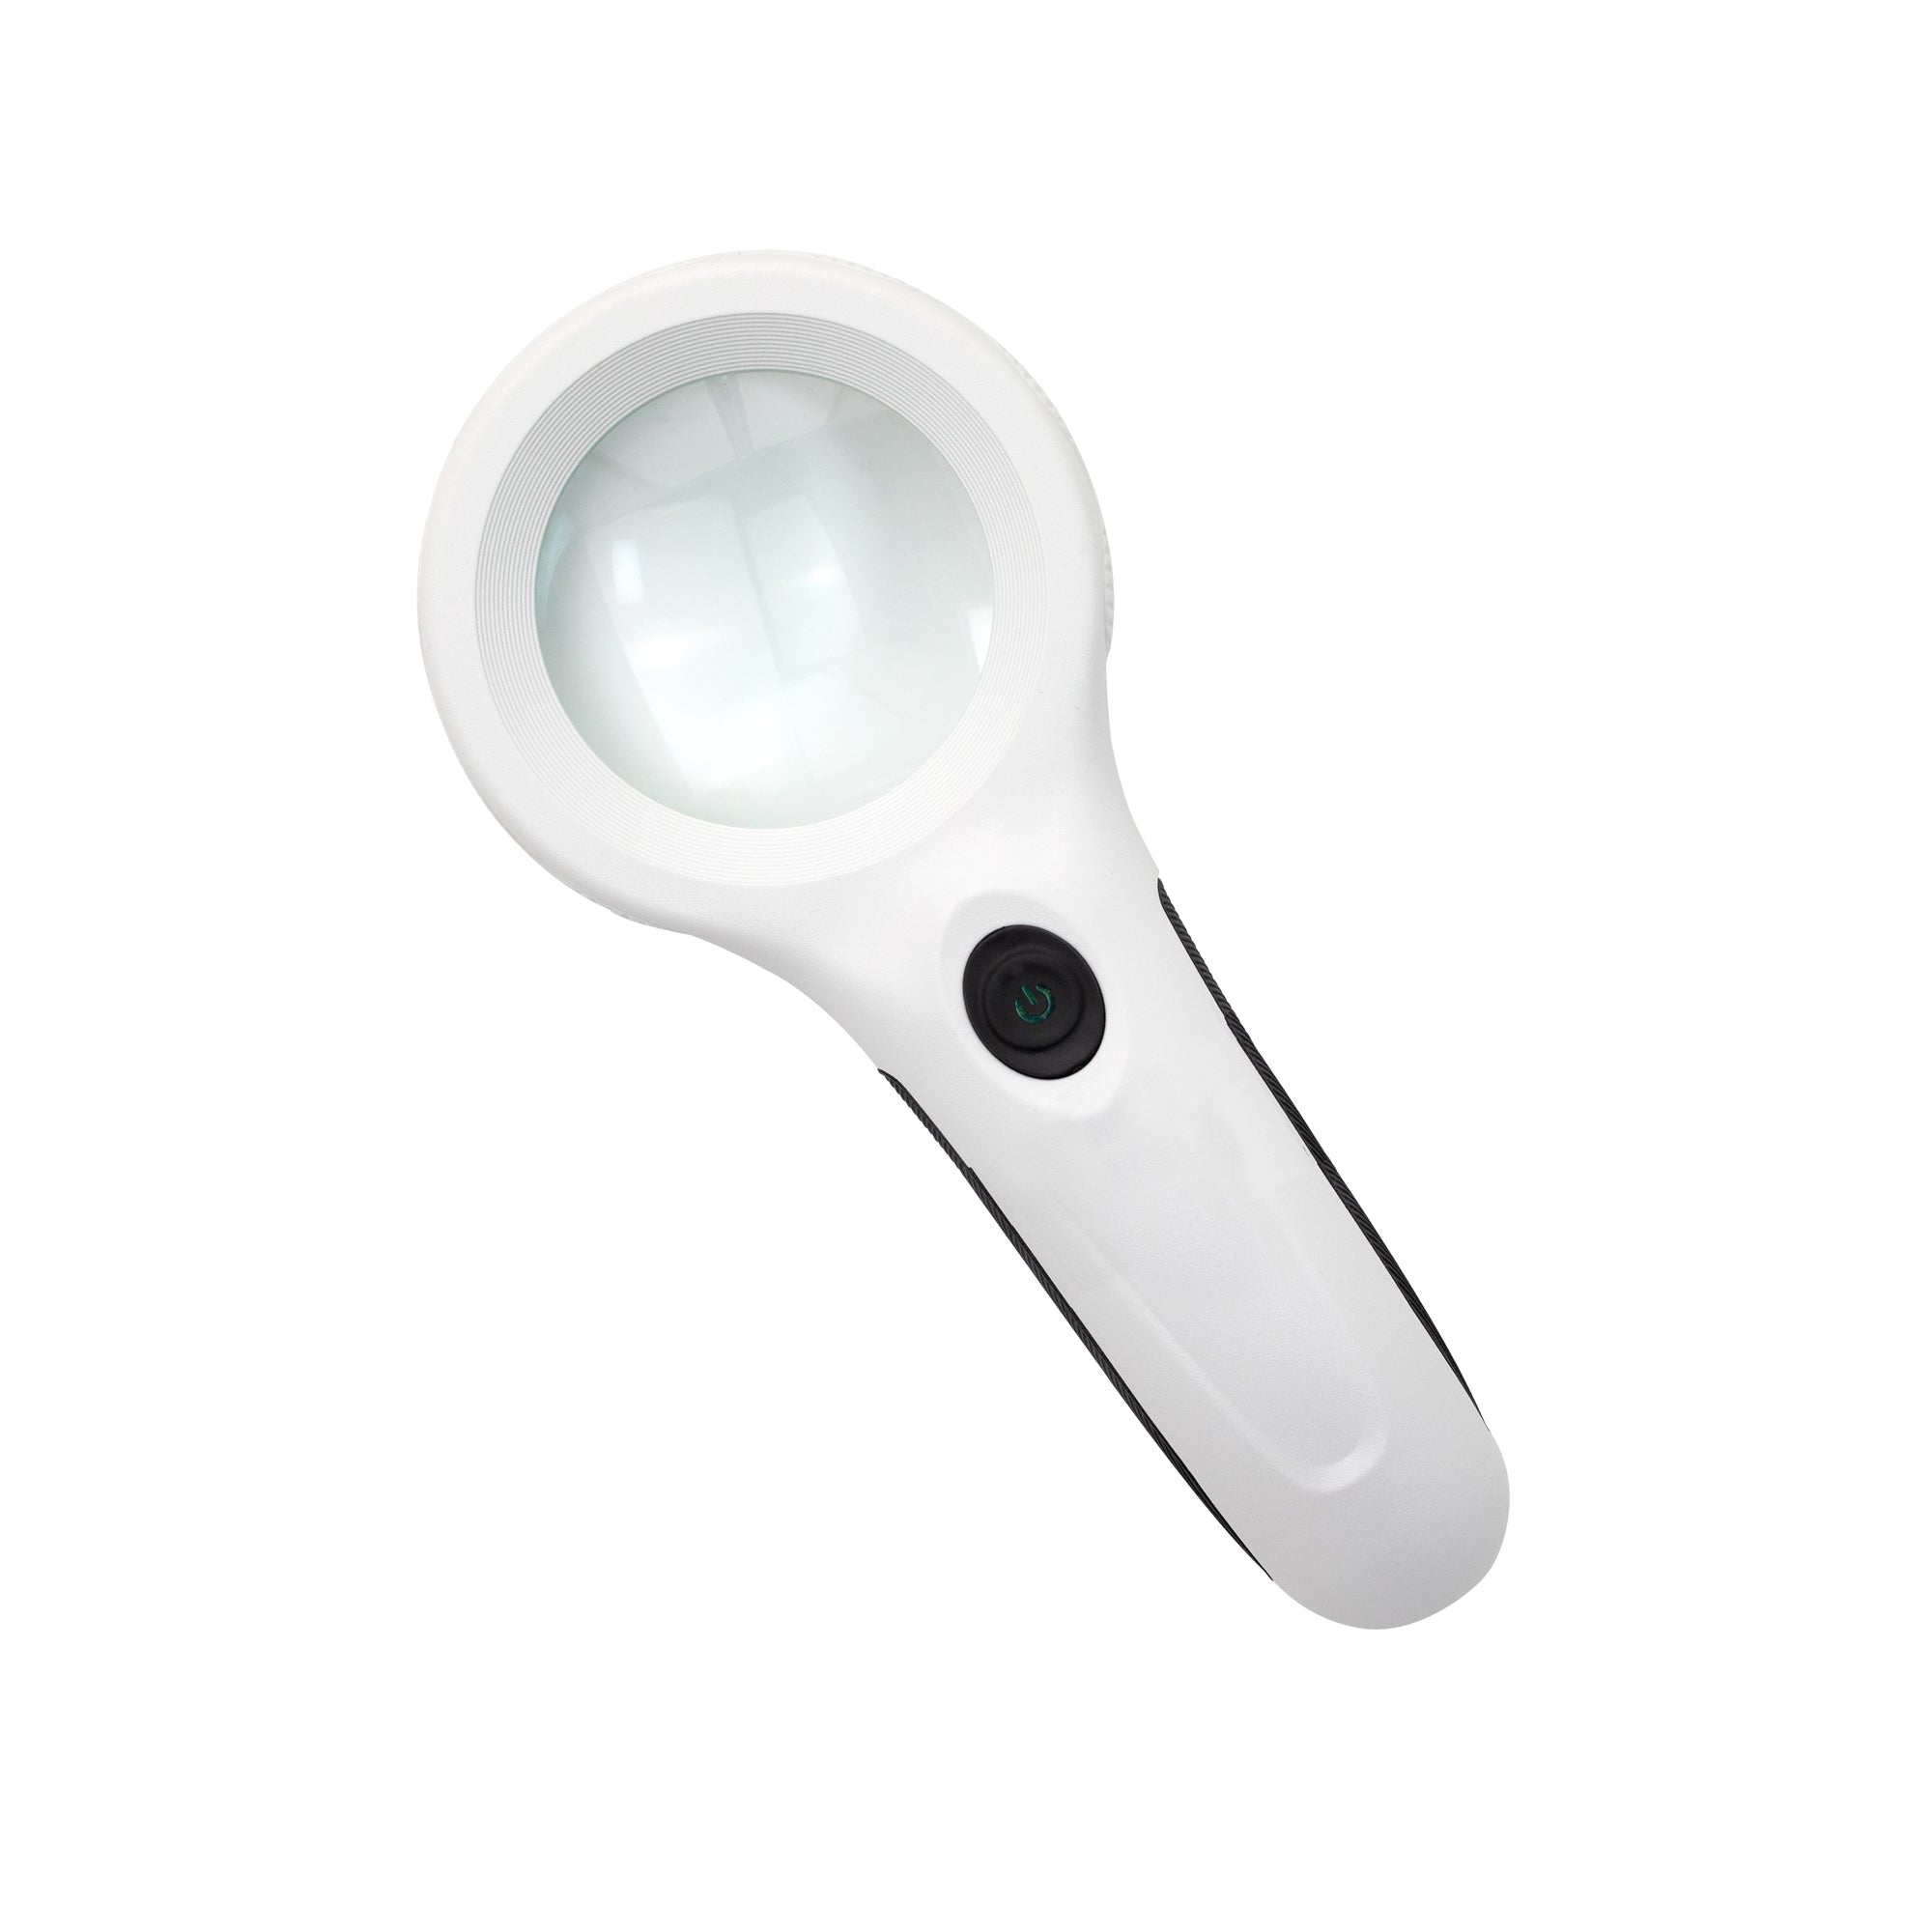 XX-81001-A - Light Head Magnifying Glass